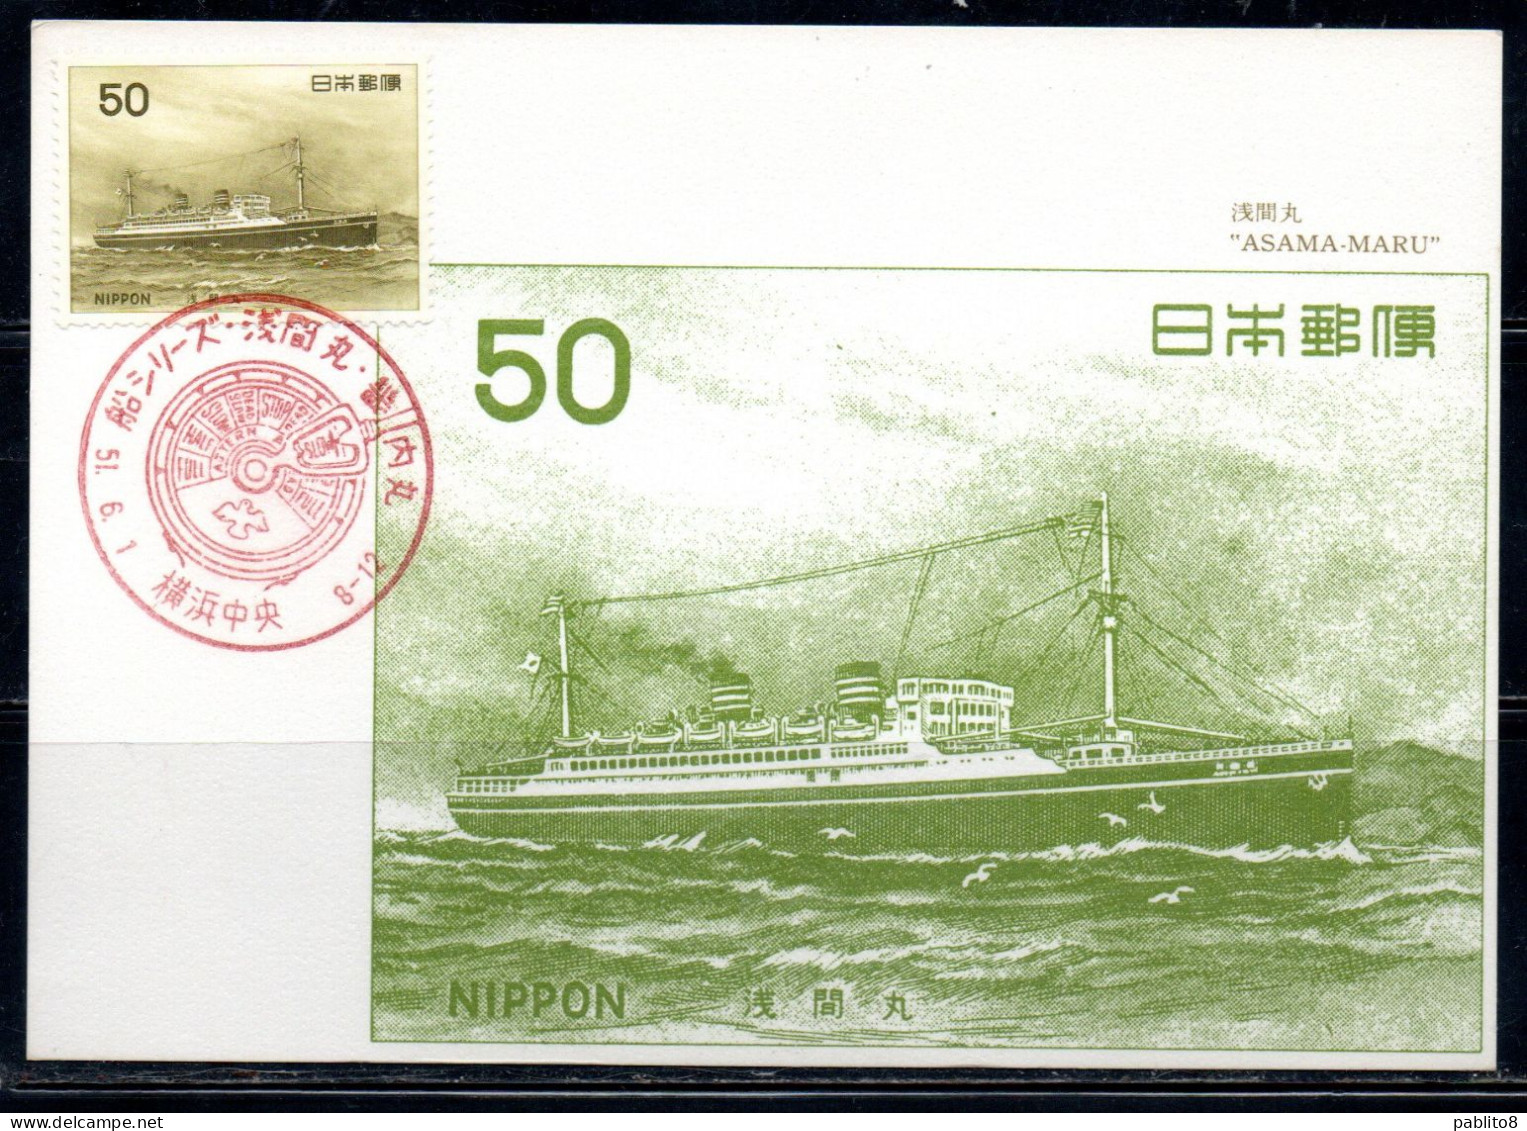 JAPAN GIAPPONE 1975 1976 HISTORIC SHIPS ISSUE ASAMA-MARU SHIP 50y MAXI MAXIMUM CARD - Maximumkaarten